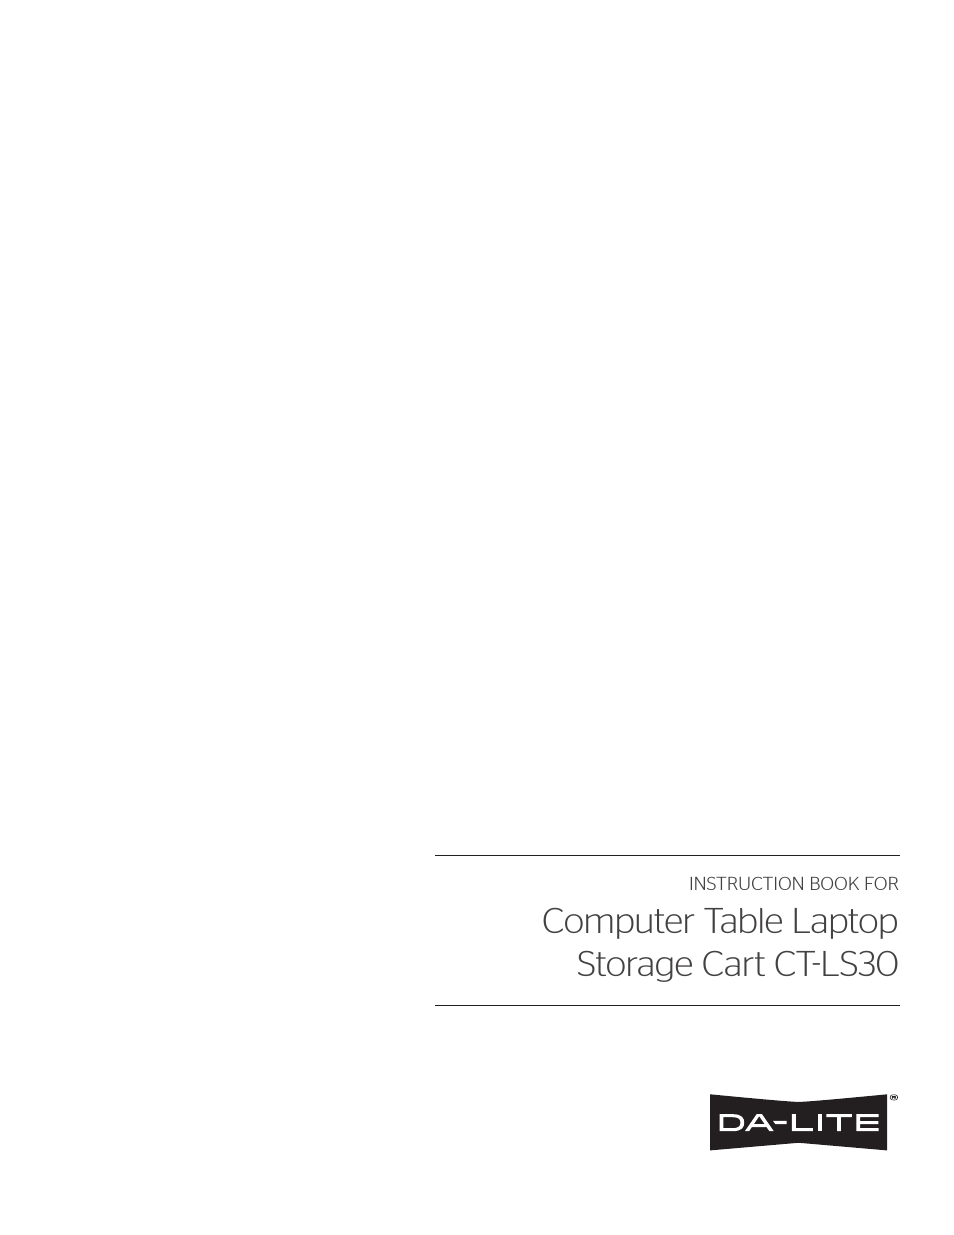 CT-LS30 Laptop Storage Cart